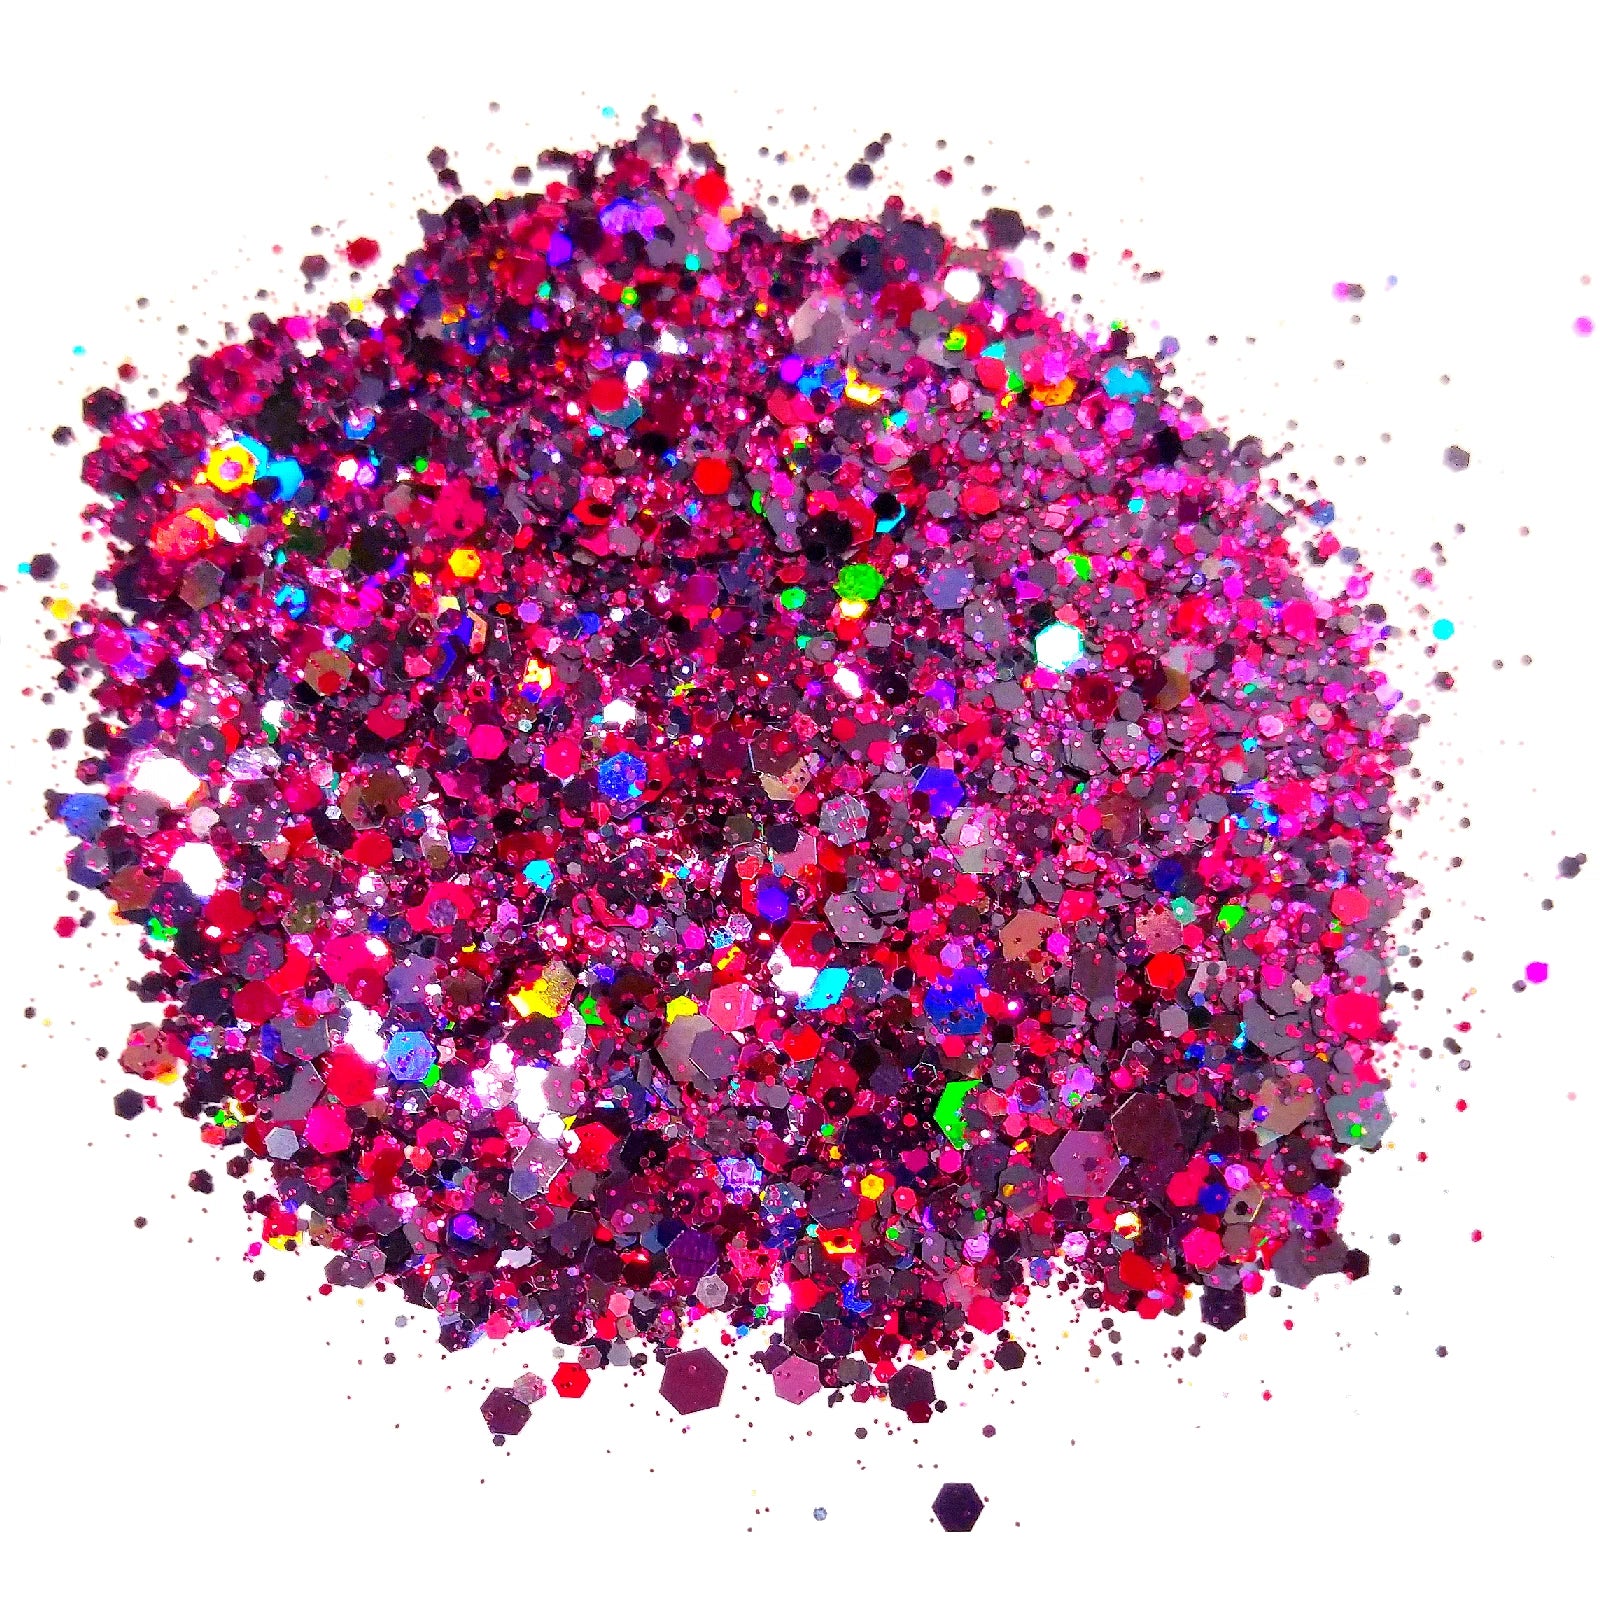 Show Girl Purple Pink Gold Metallic Chunky Mix Glitter Shaker